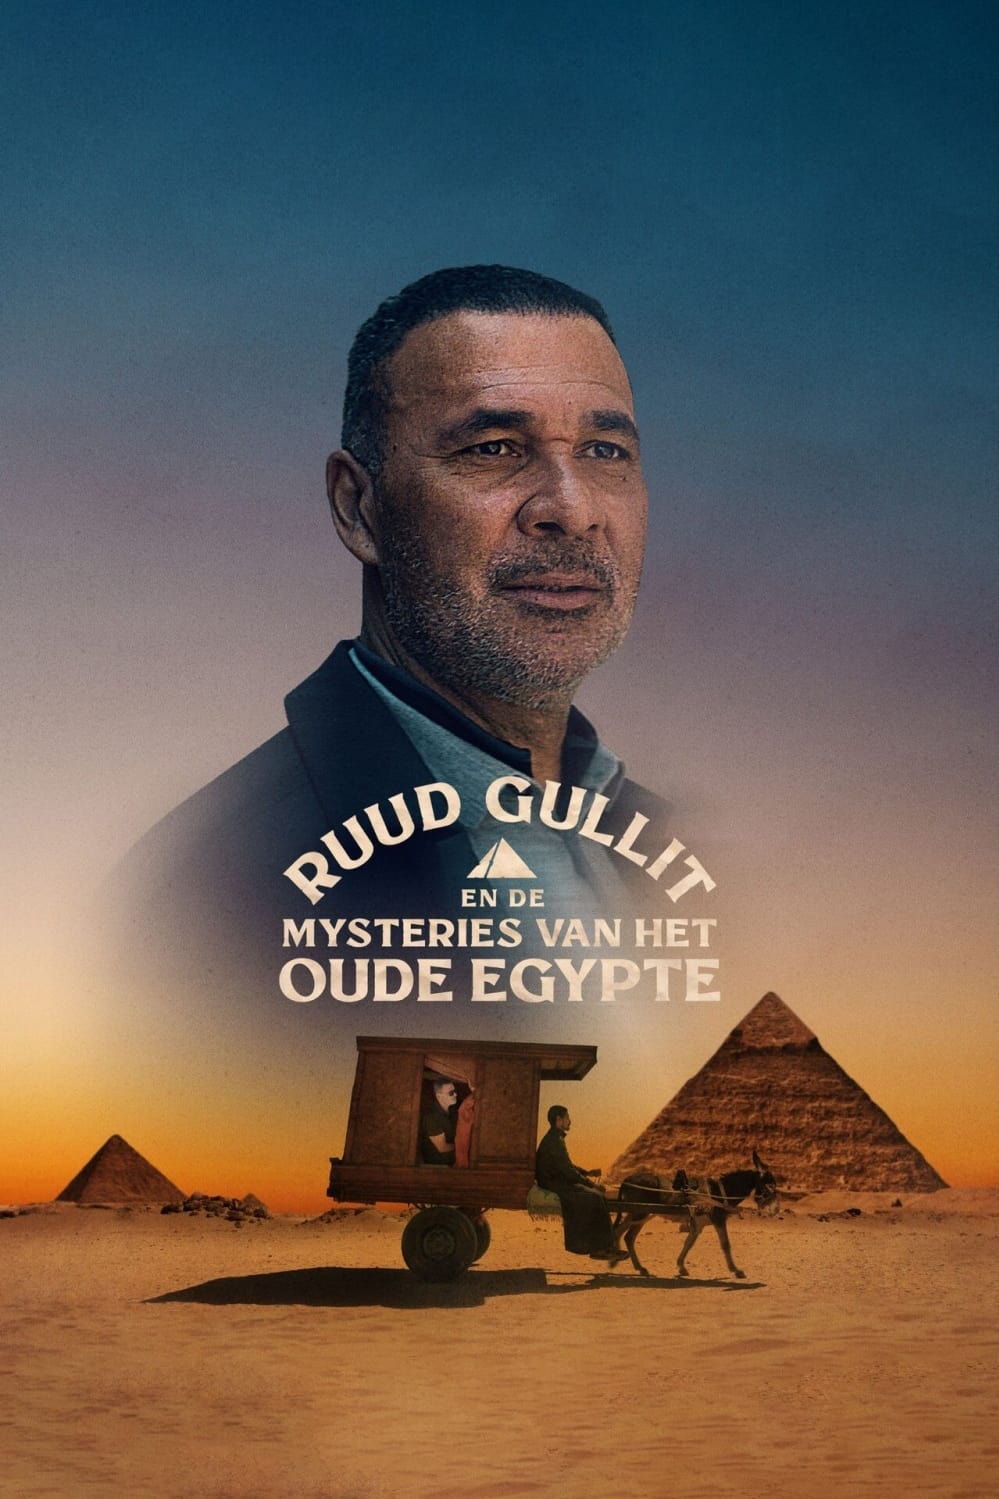 Ruud Gullit en de mysteries van het oude Egypte TV Shows About Football